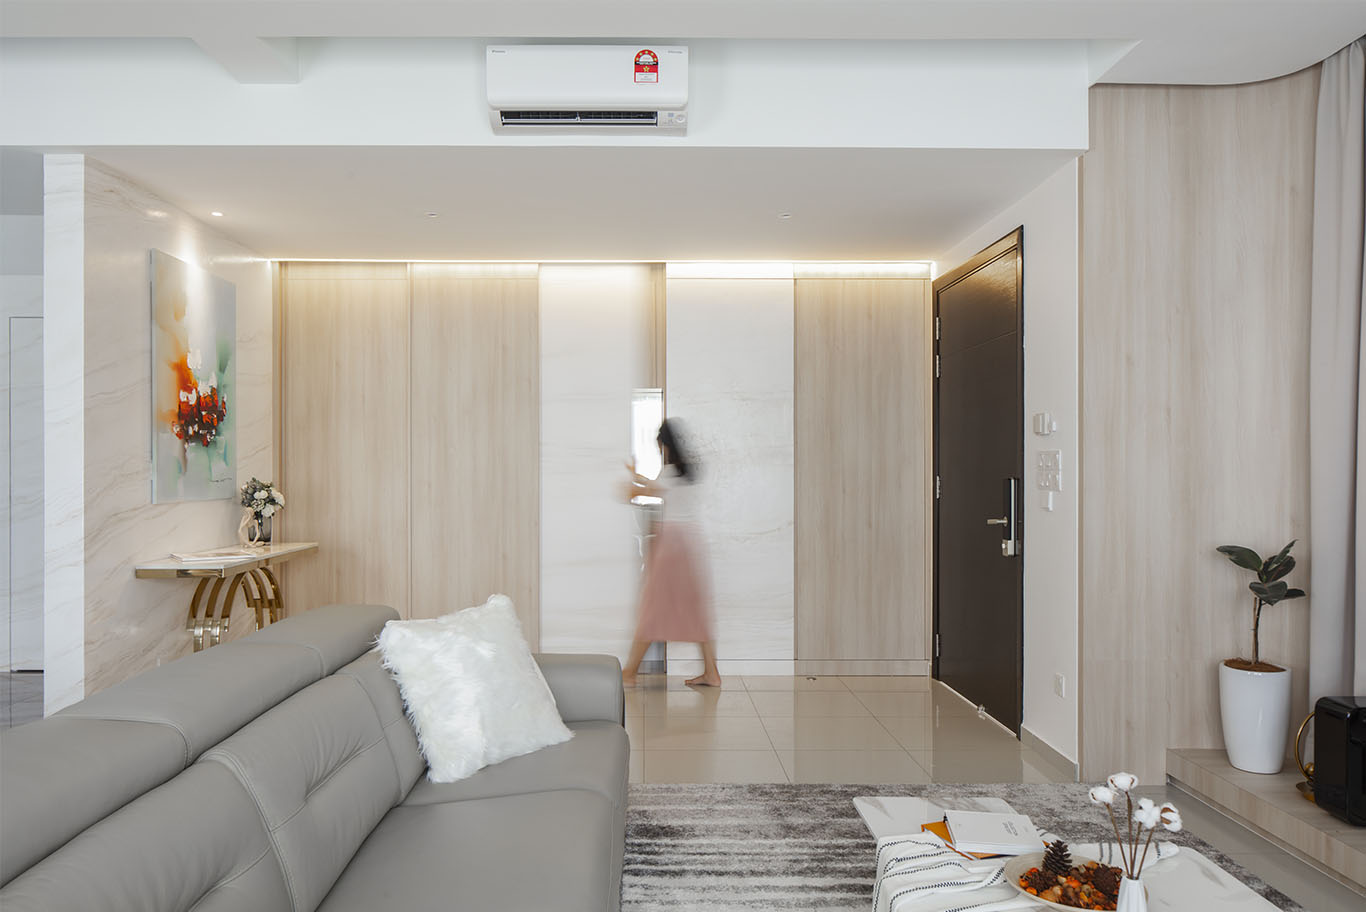 Grande Rhapsody minimalist living room with white hidden wall sliding door Mieux interior design